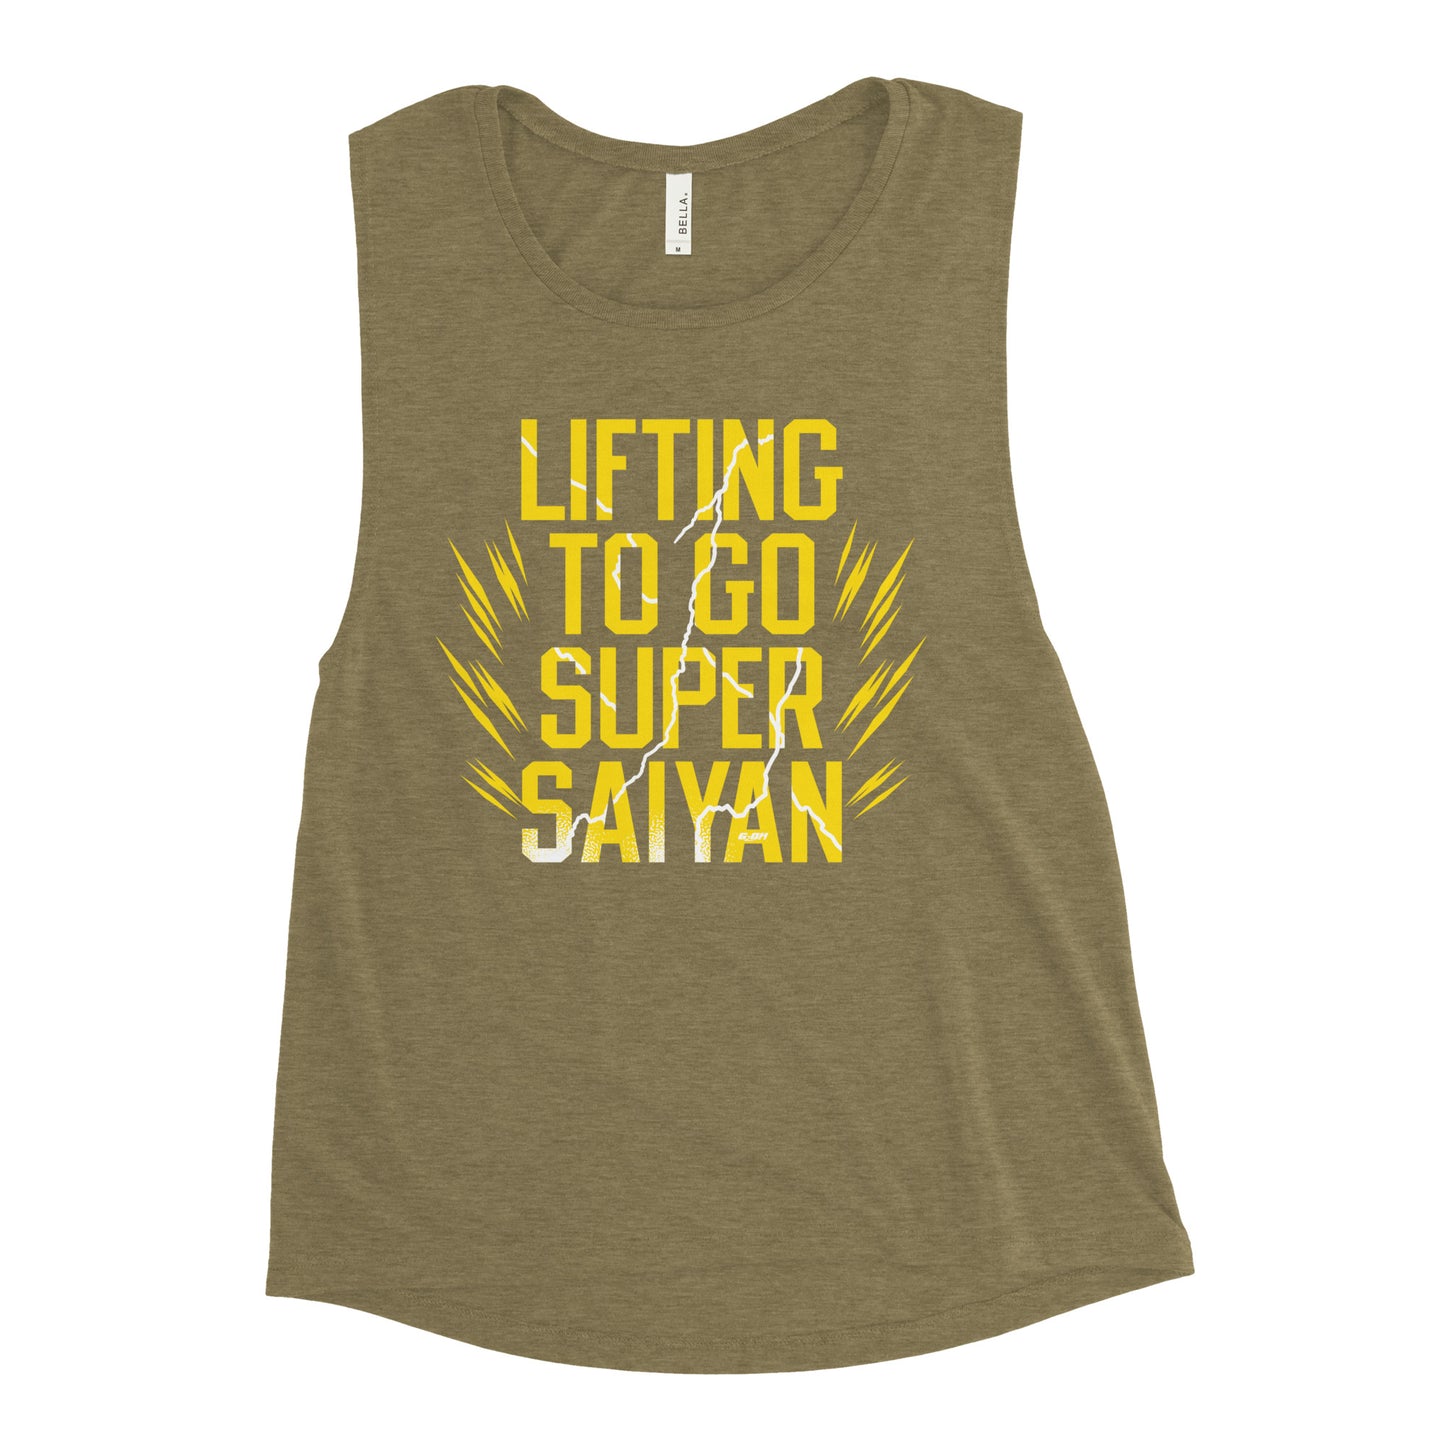 Lifting To Go Super Saiyan Women's Muscle Tank